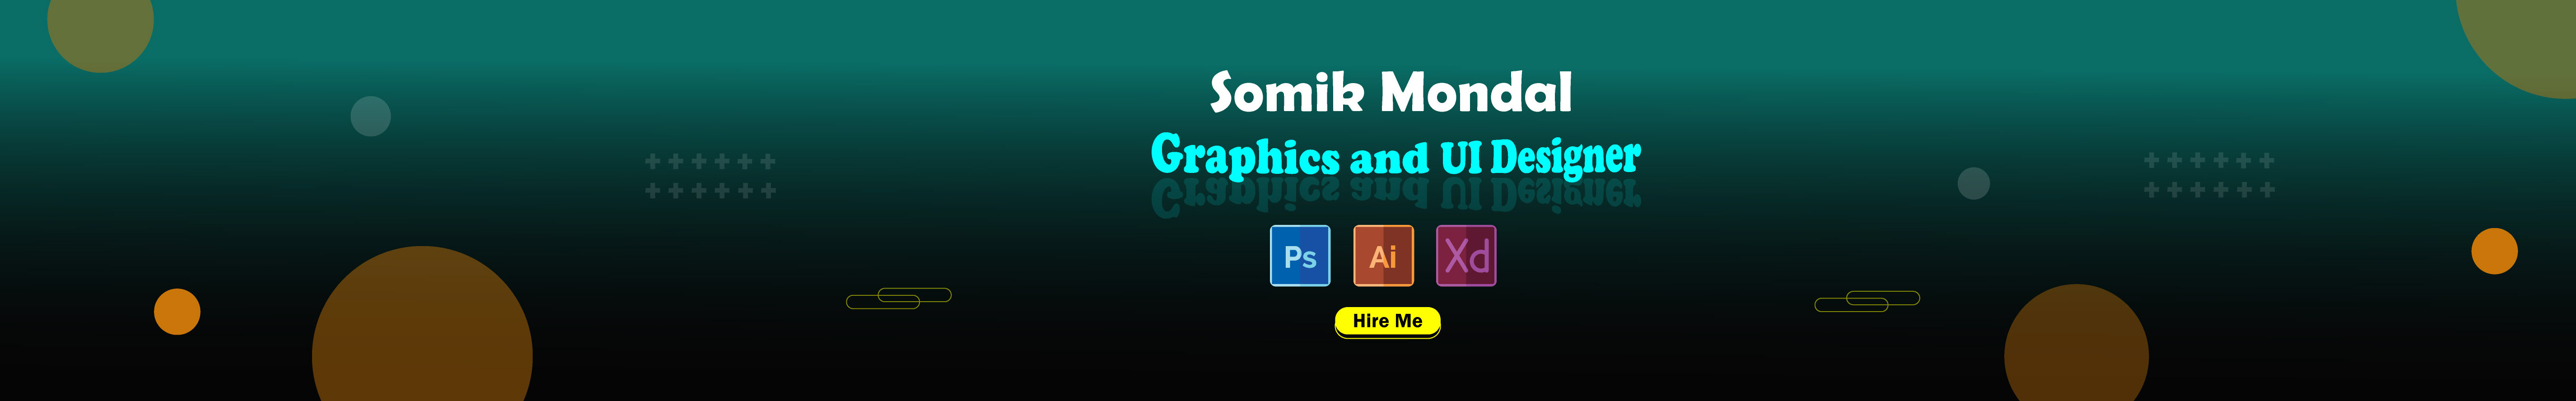 Somik Mondal's profile banner